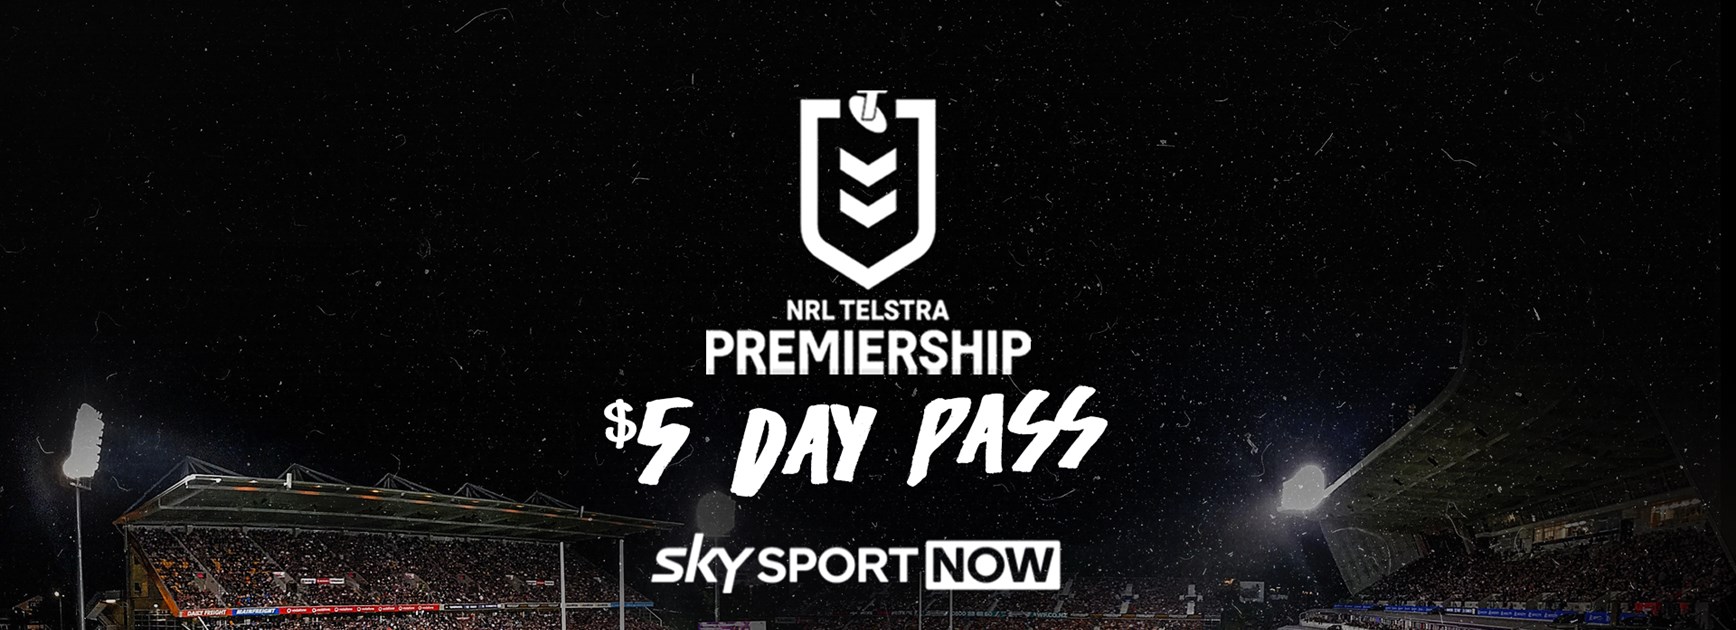 Sky Sport Live $5 Day Pass